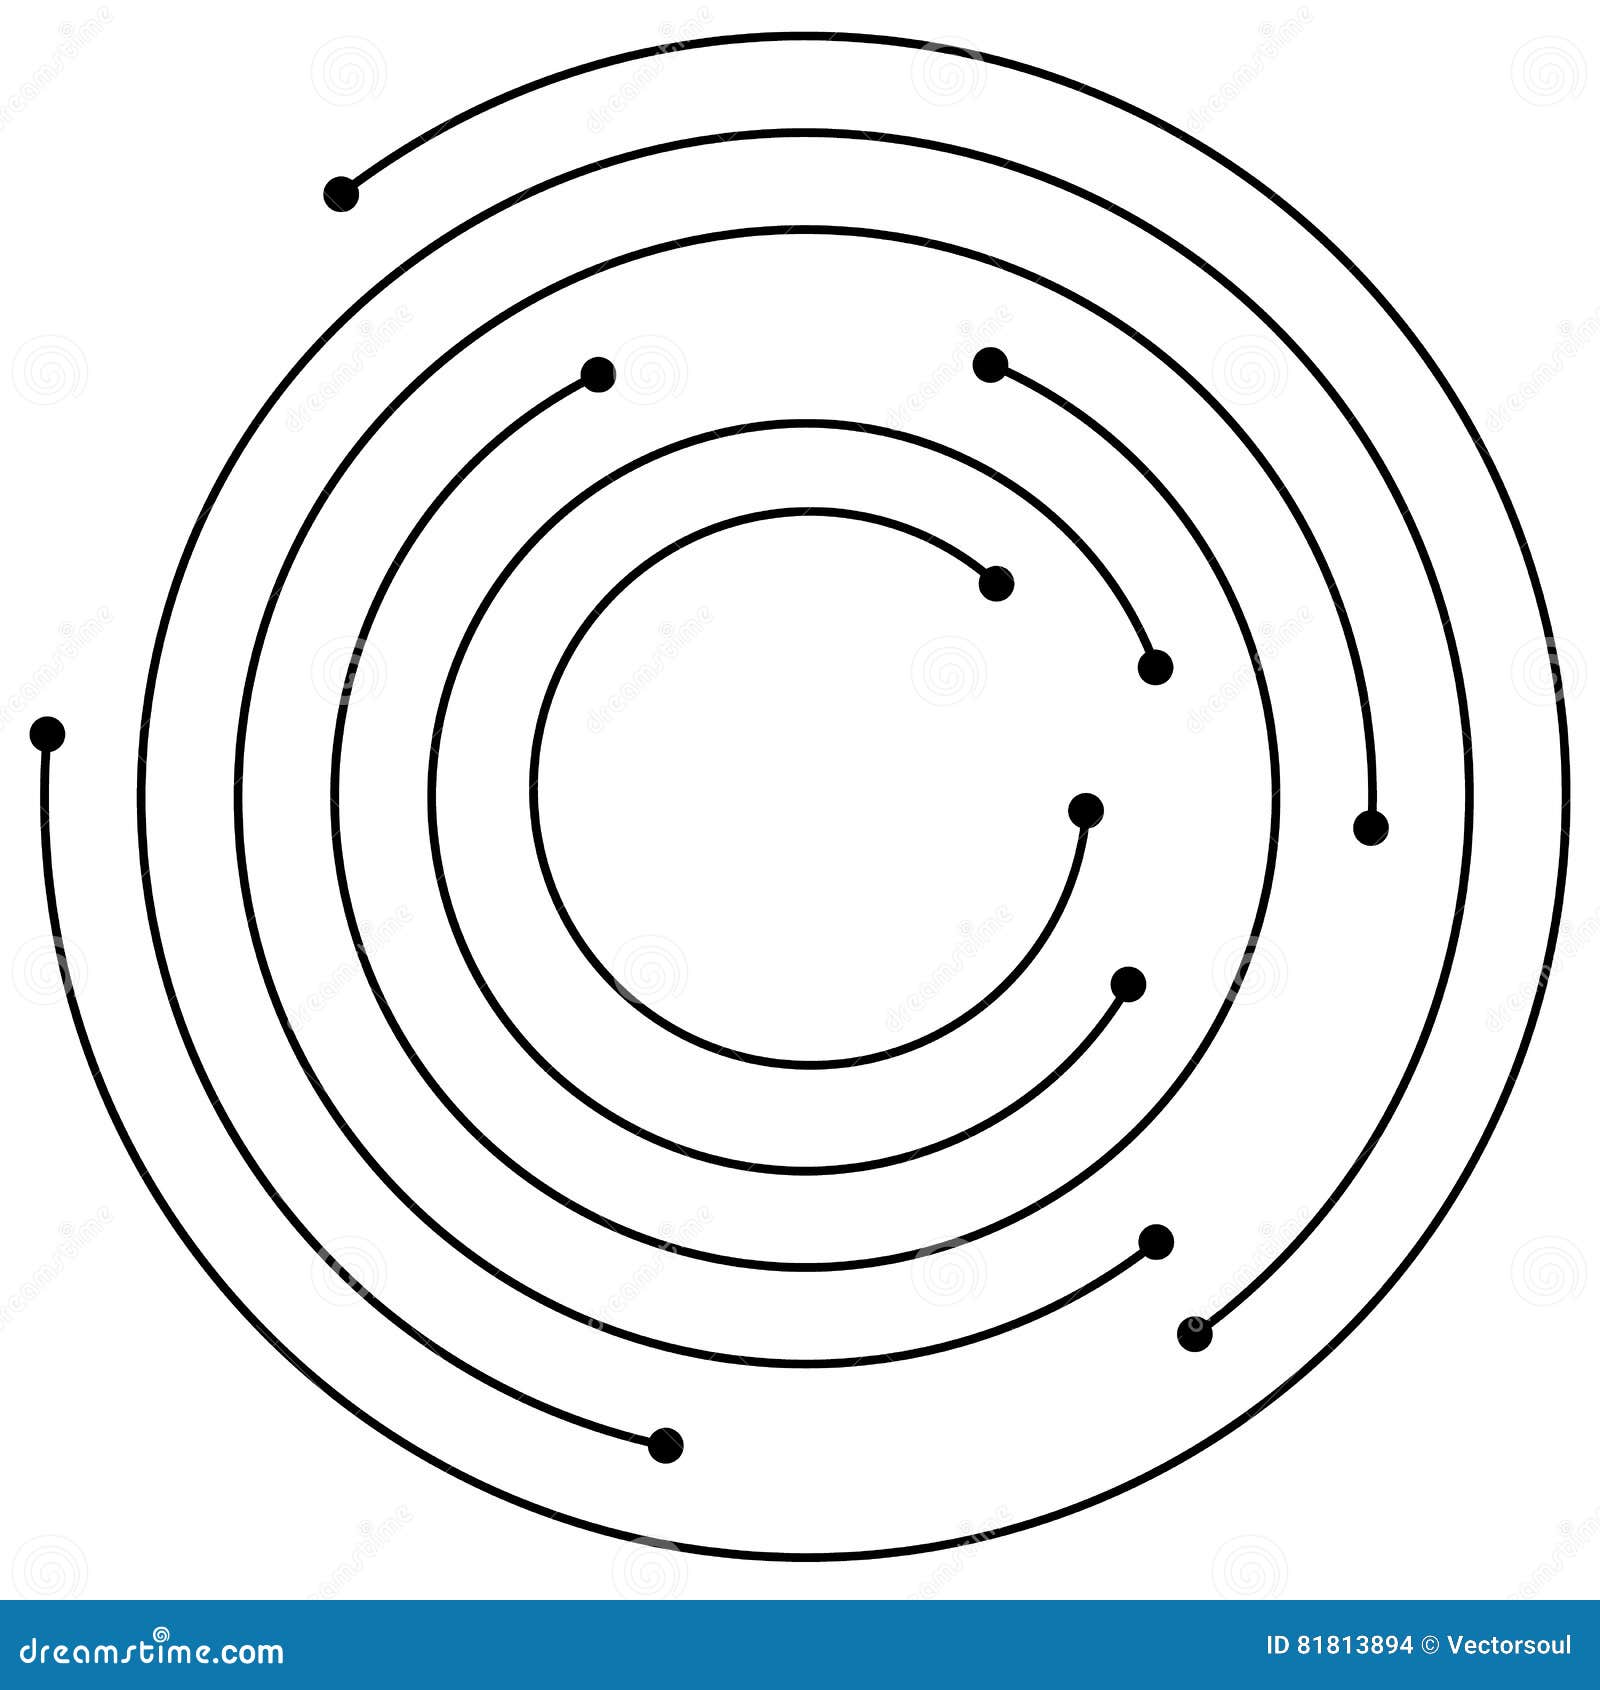 random concentric circles with dots. circular, spiral  .